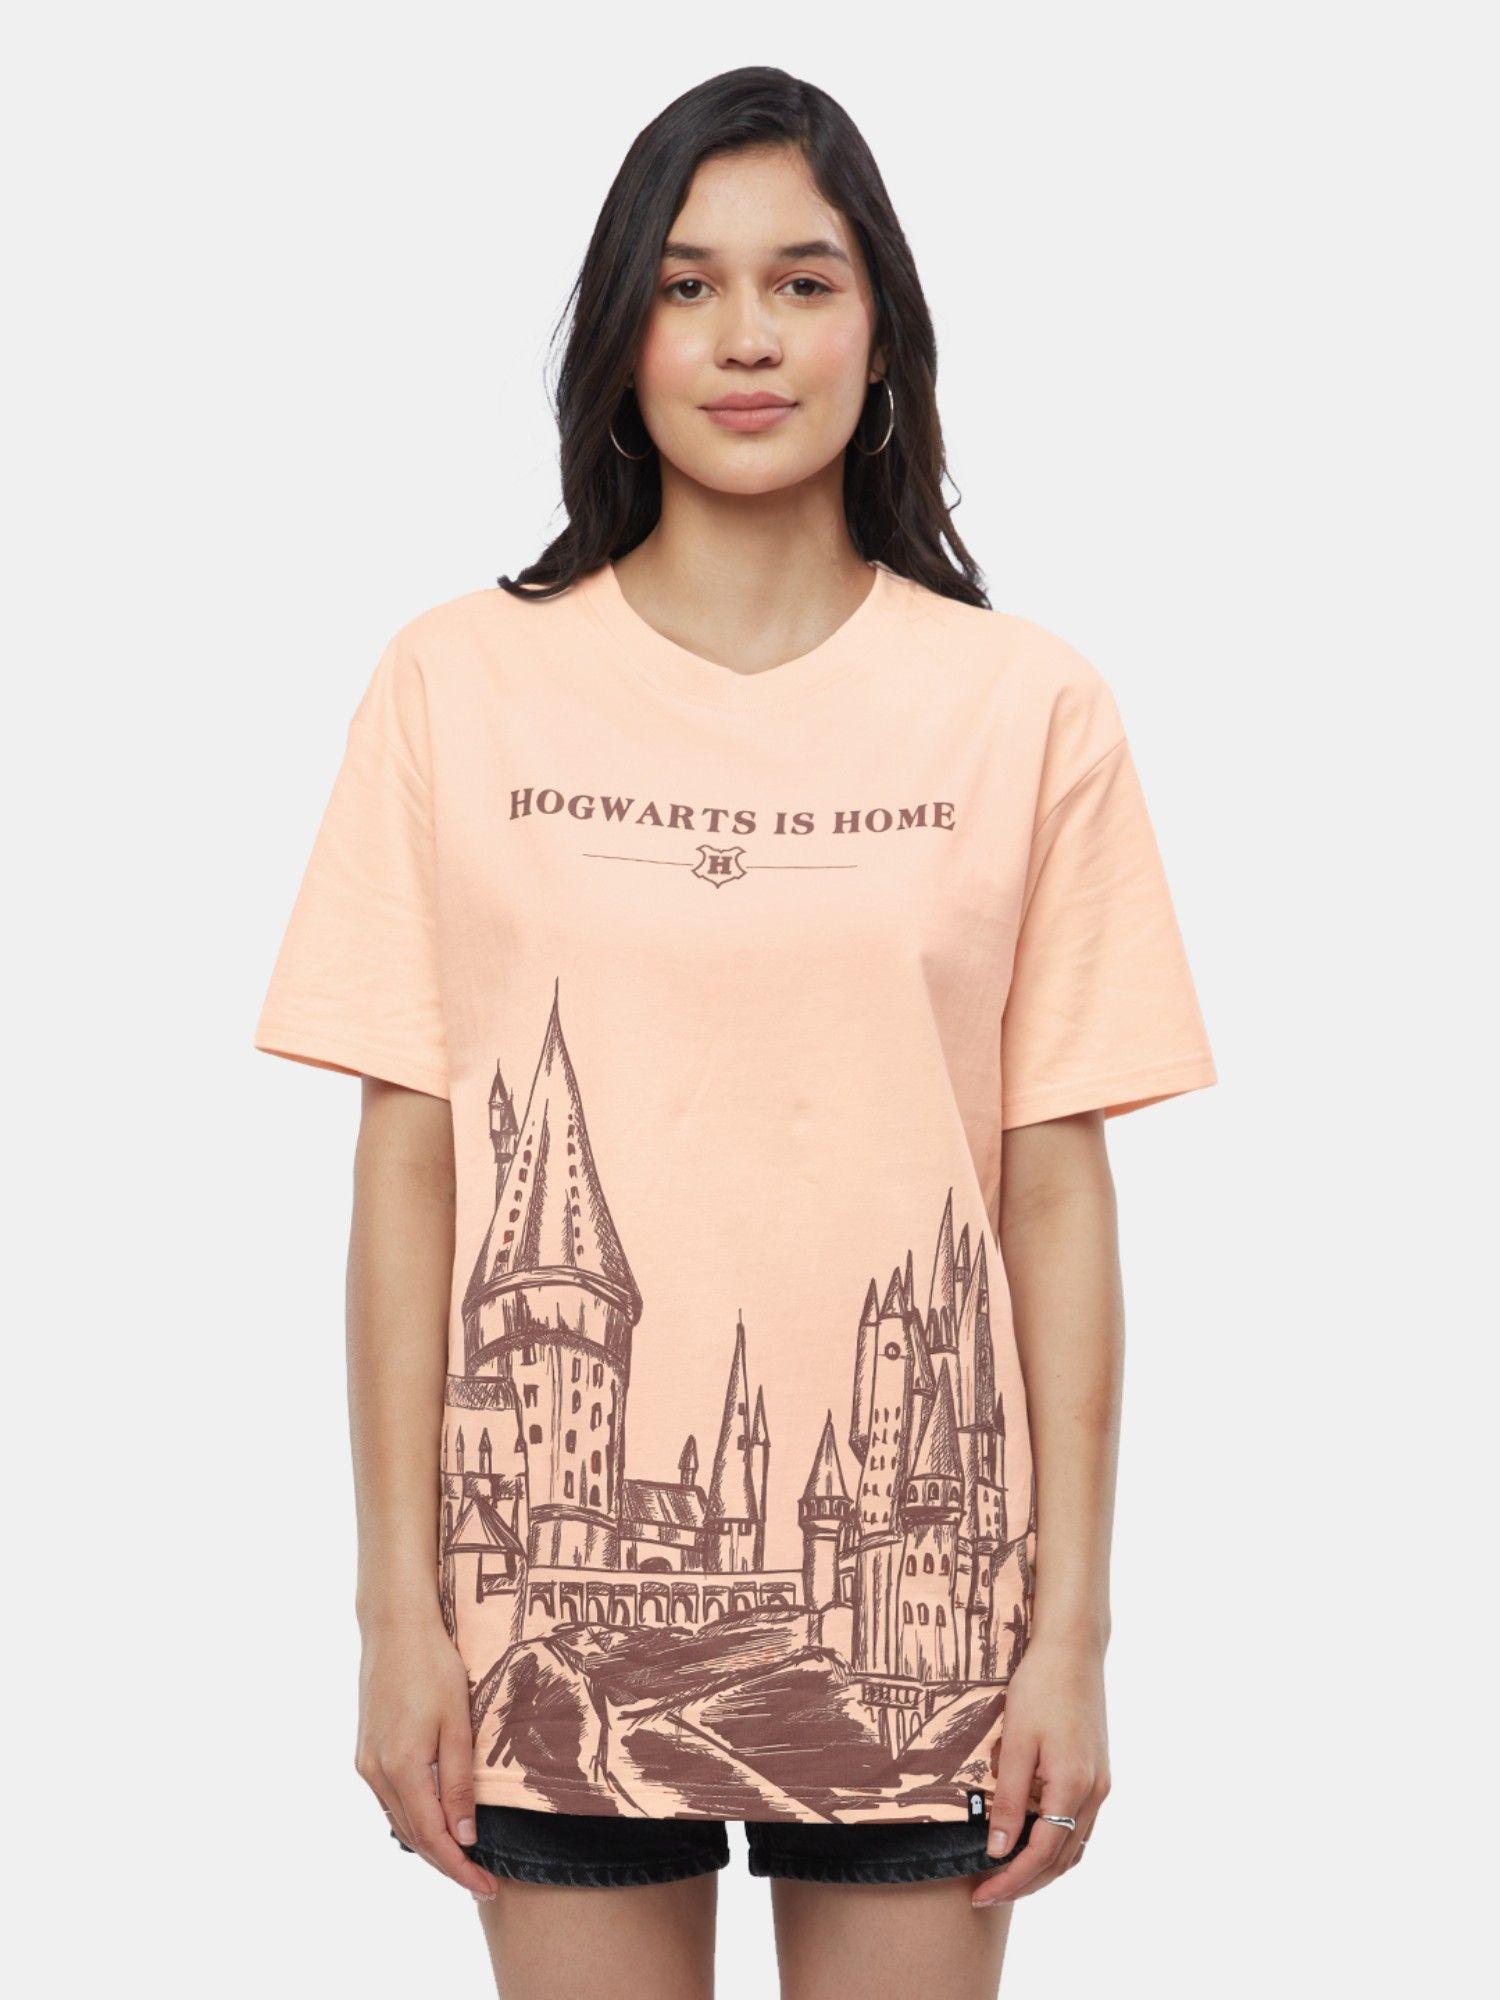 harry potter hogwarts is home boyfriend t-shirt